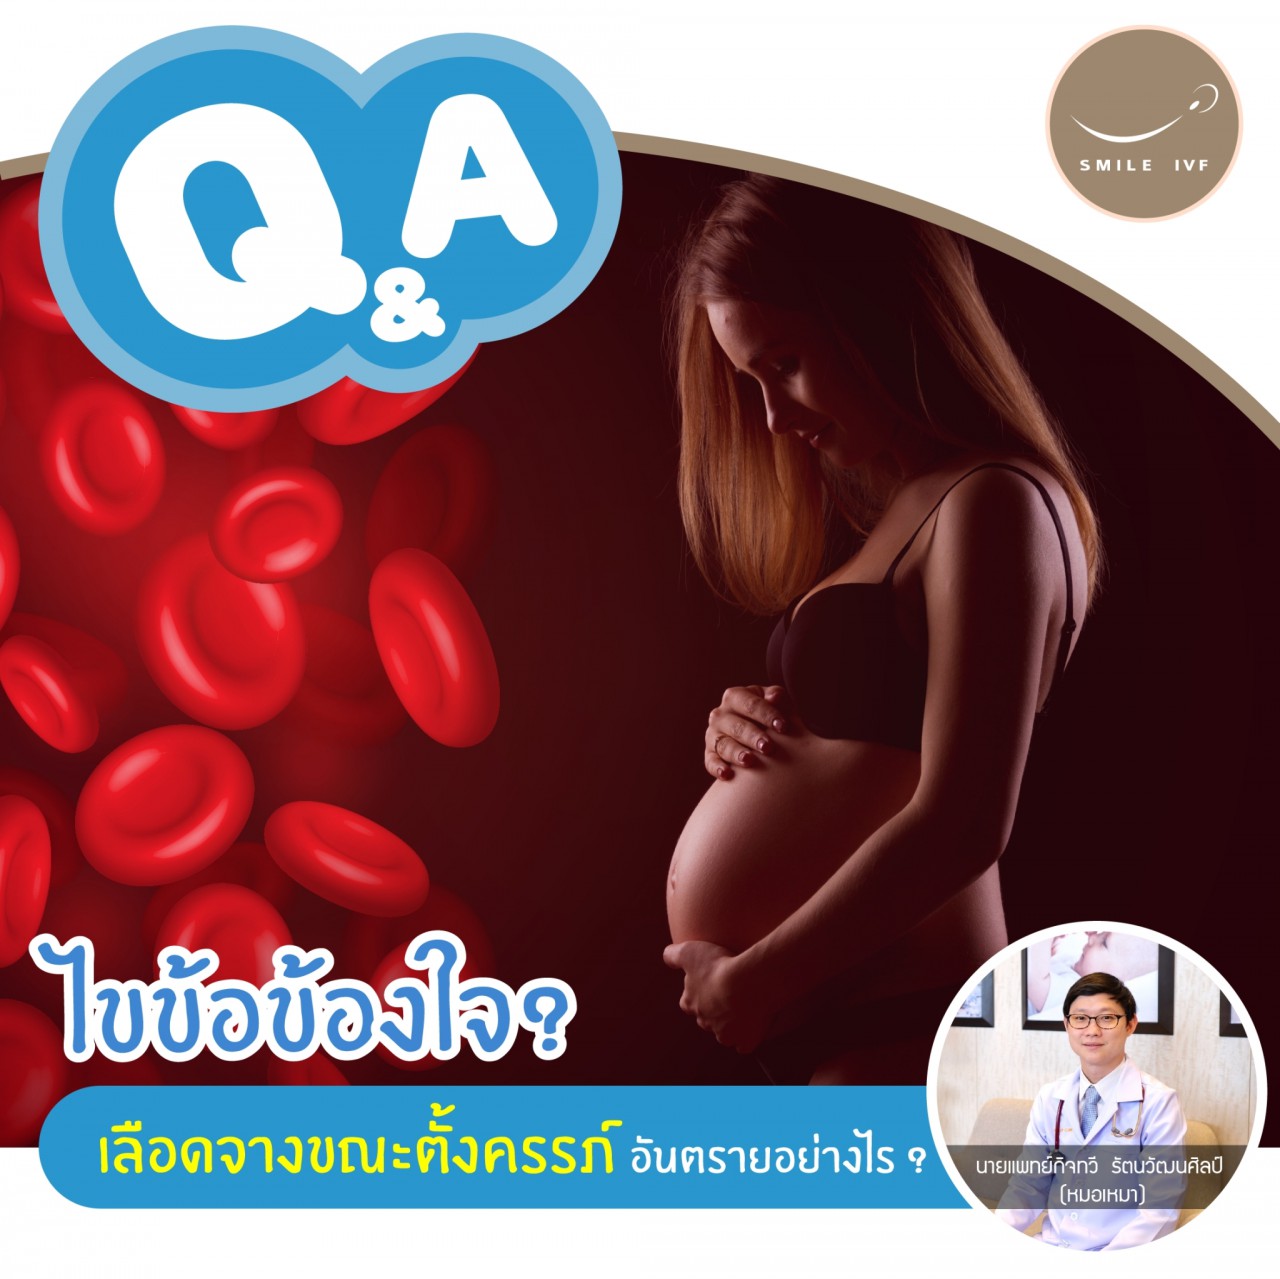 Smile IVF Clinic - Q&A ไขข้อข้องใจ? เลือดจางขณะตั้งครรภ์ อันตรายอย่างไร?